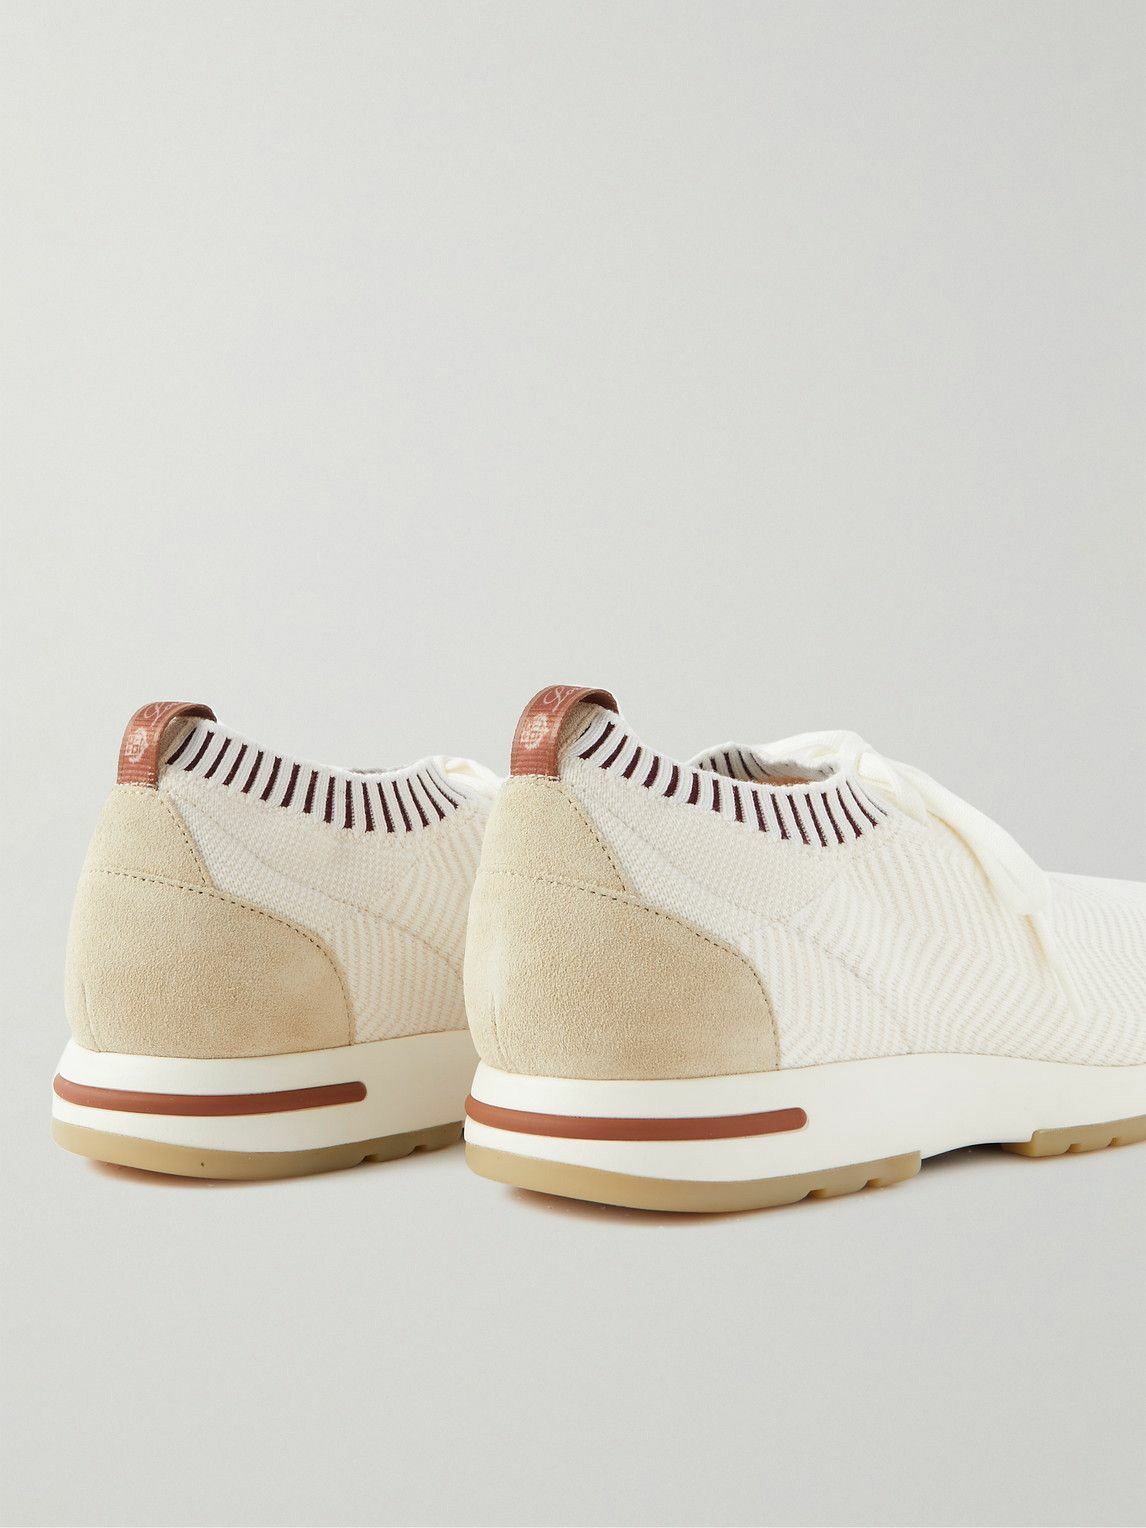 Loro Piana 360 Flexy Walk Wish Stretch-Knit Slip-On Sneakers Shoes